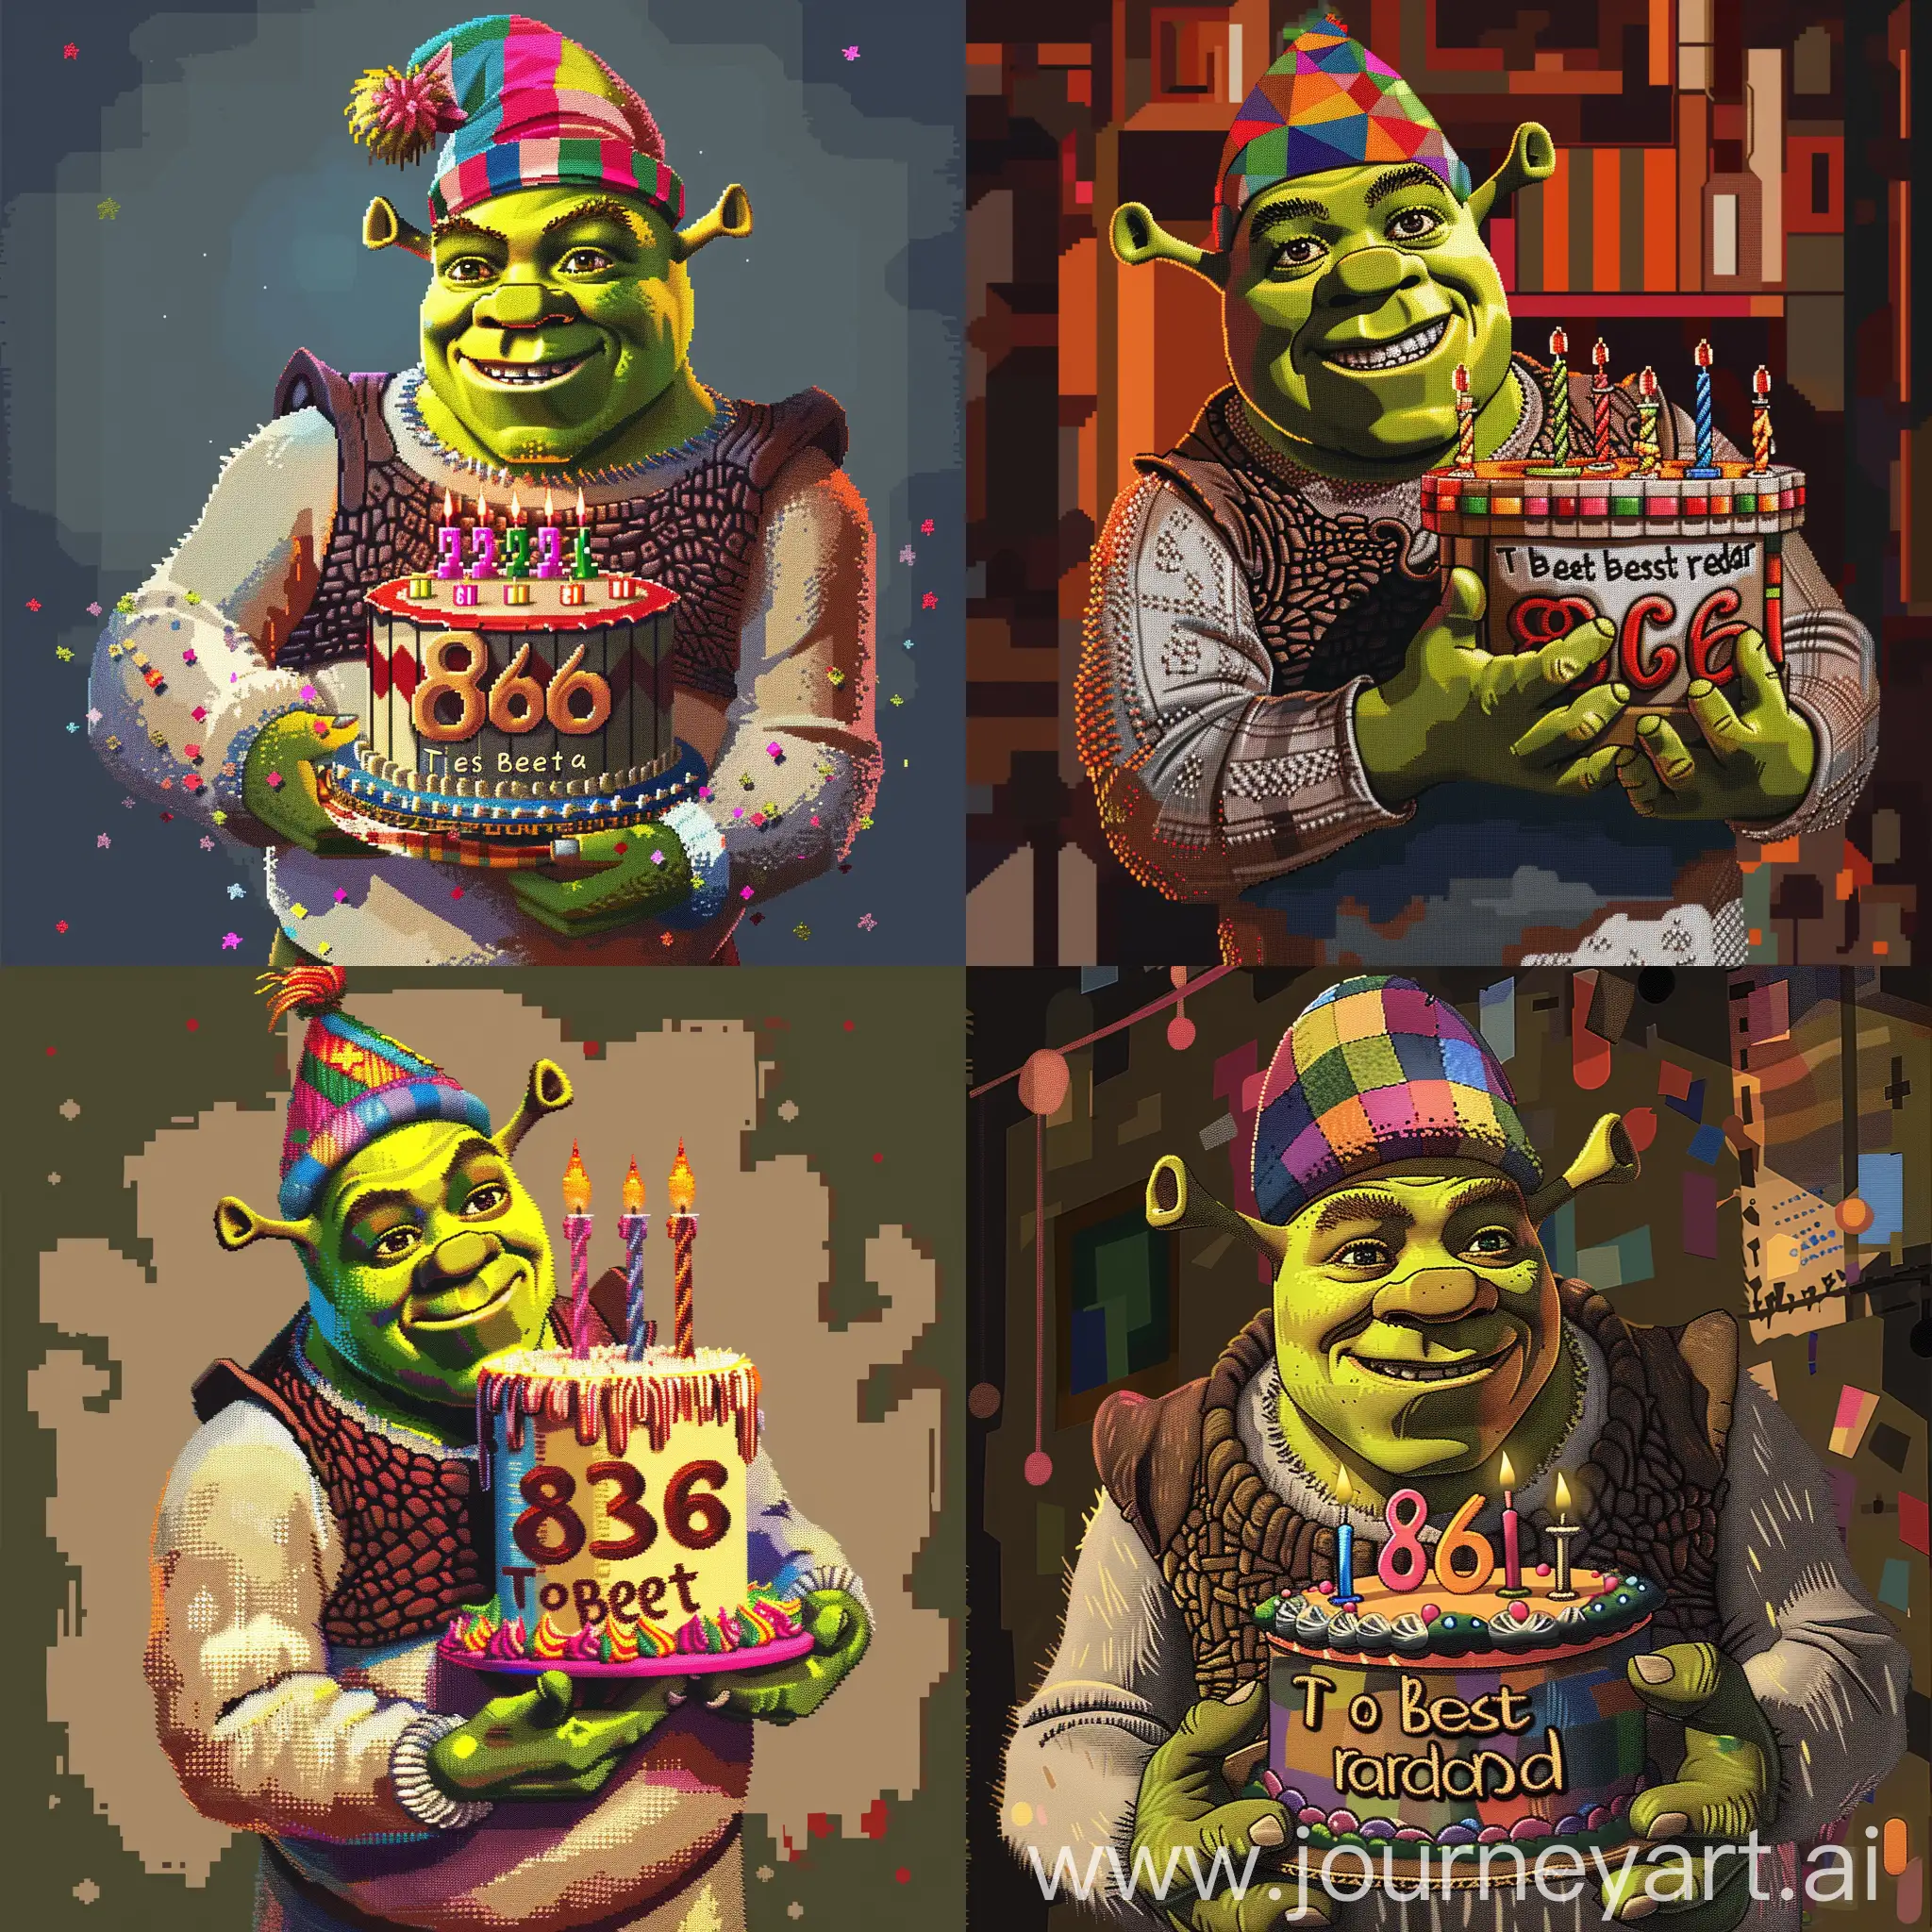 Shrek-Celebrates-836th-Birthday-with-Grandpathemed-Cake